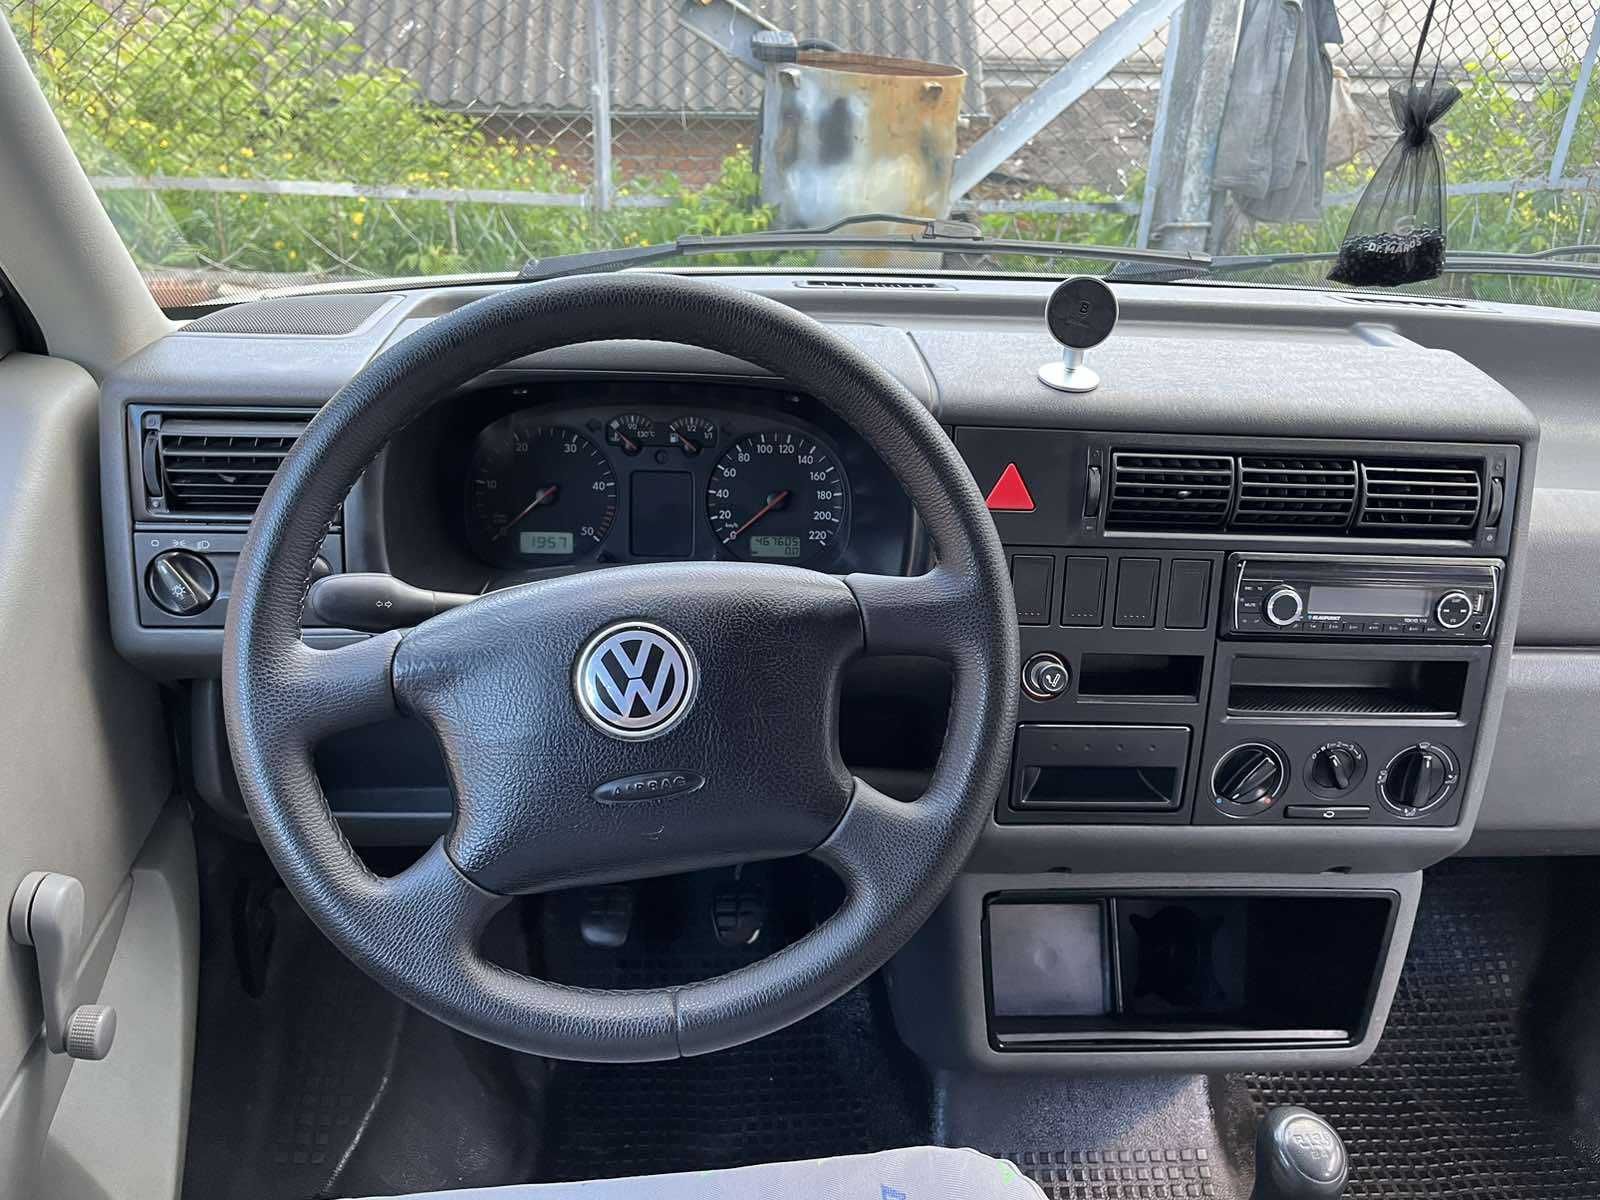 VW Transporter T4 2.5TDI 2001